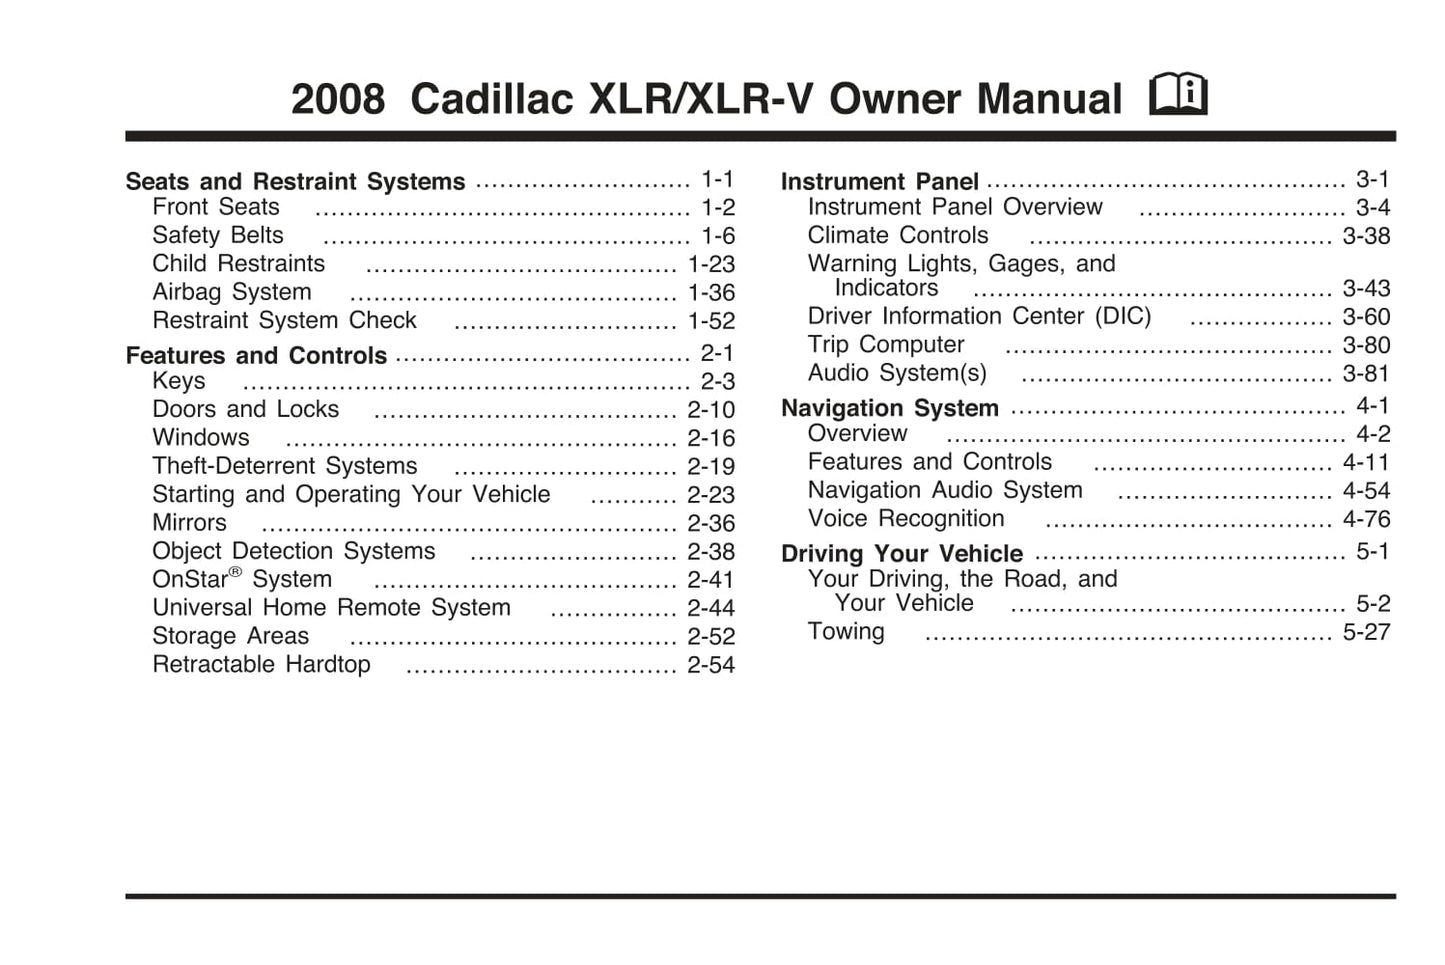 2008 Cadillac XLR/XLR-V Bedienungsanleitung | Englisch